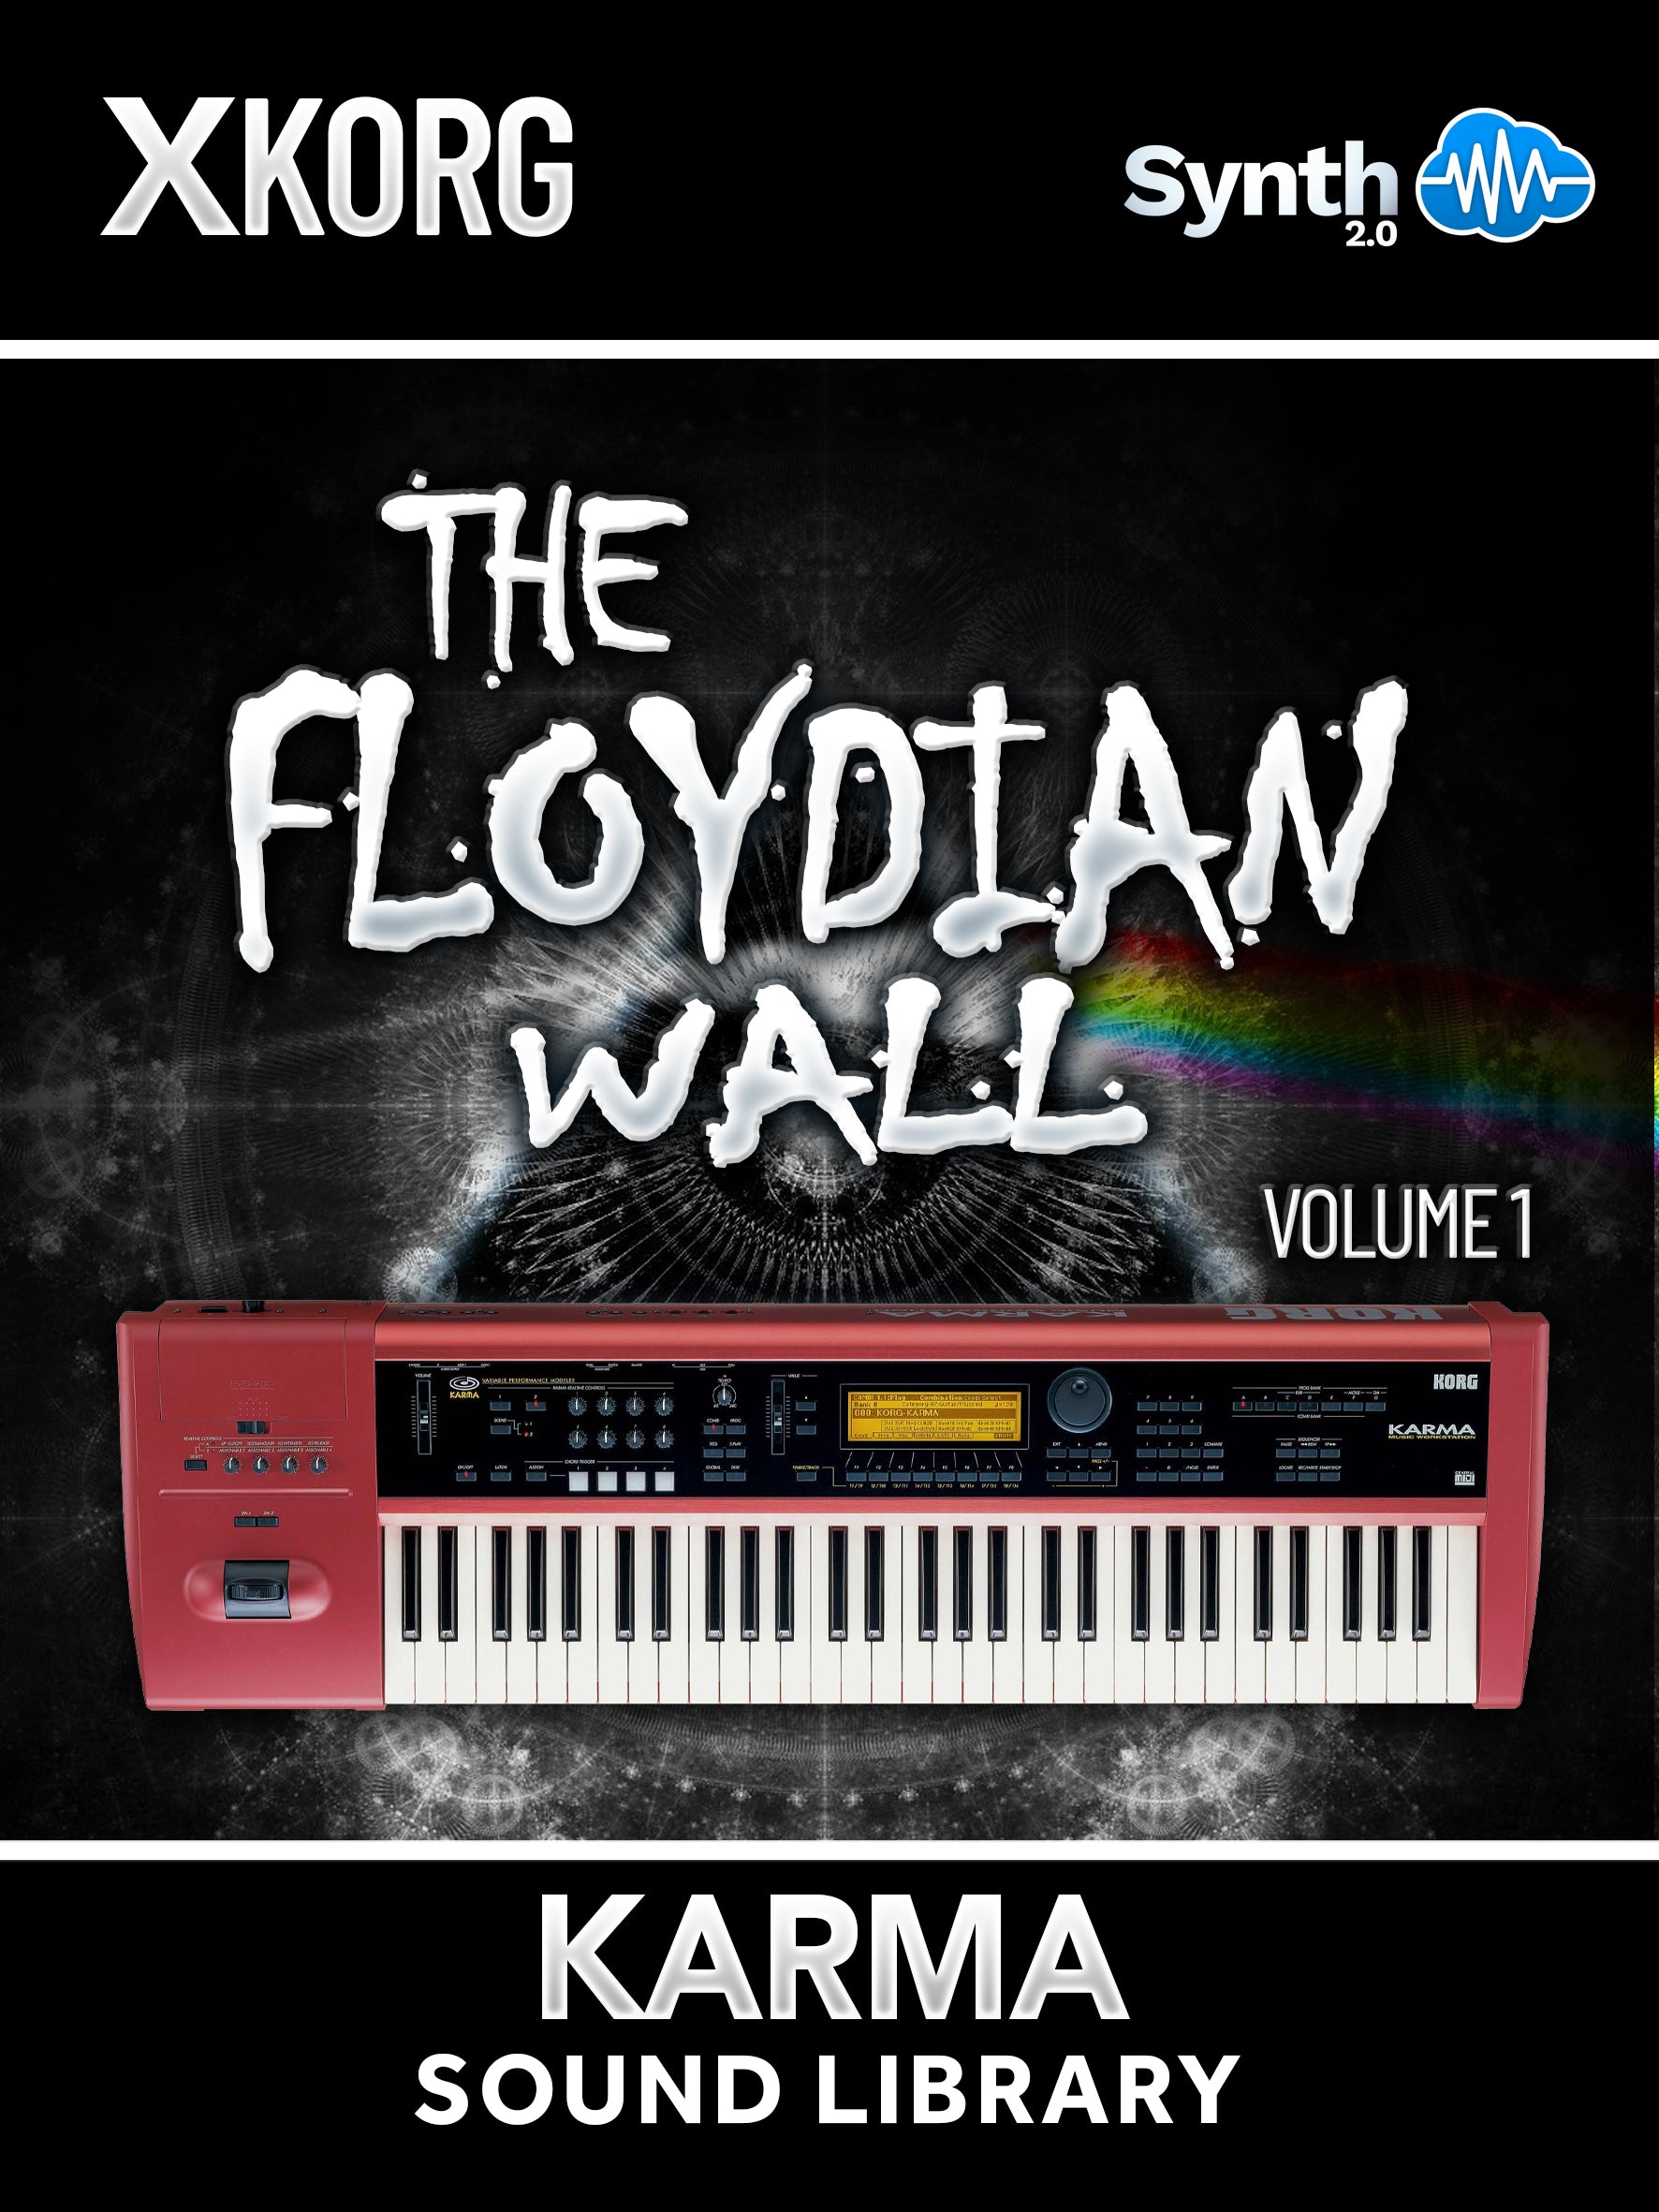 SSX101 - The Floydian Wall V.1 - Korg KARMA ( 32 presets )